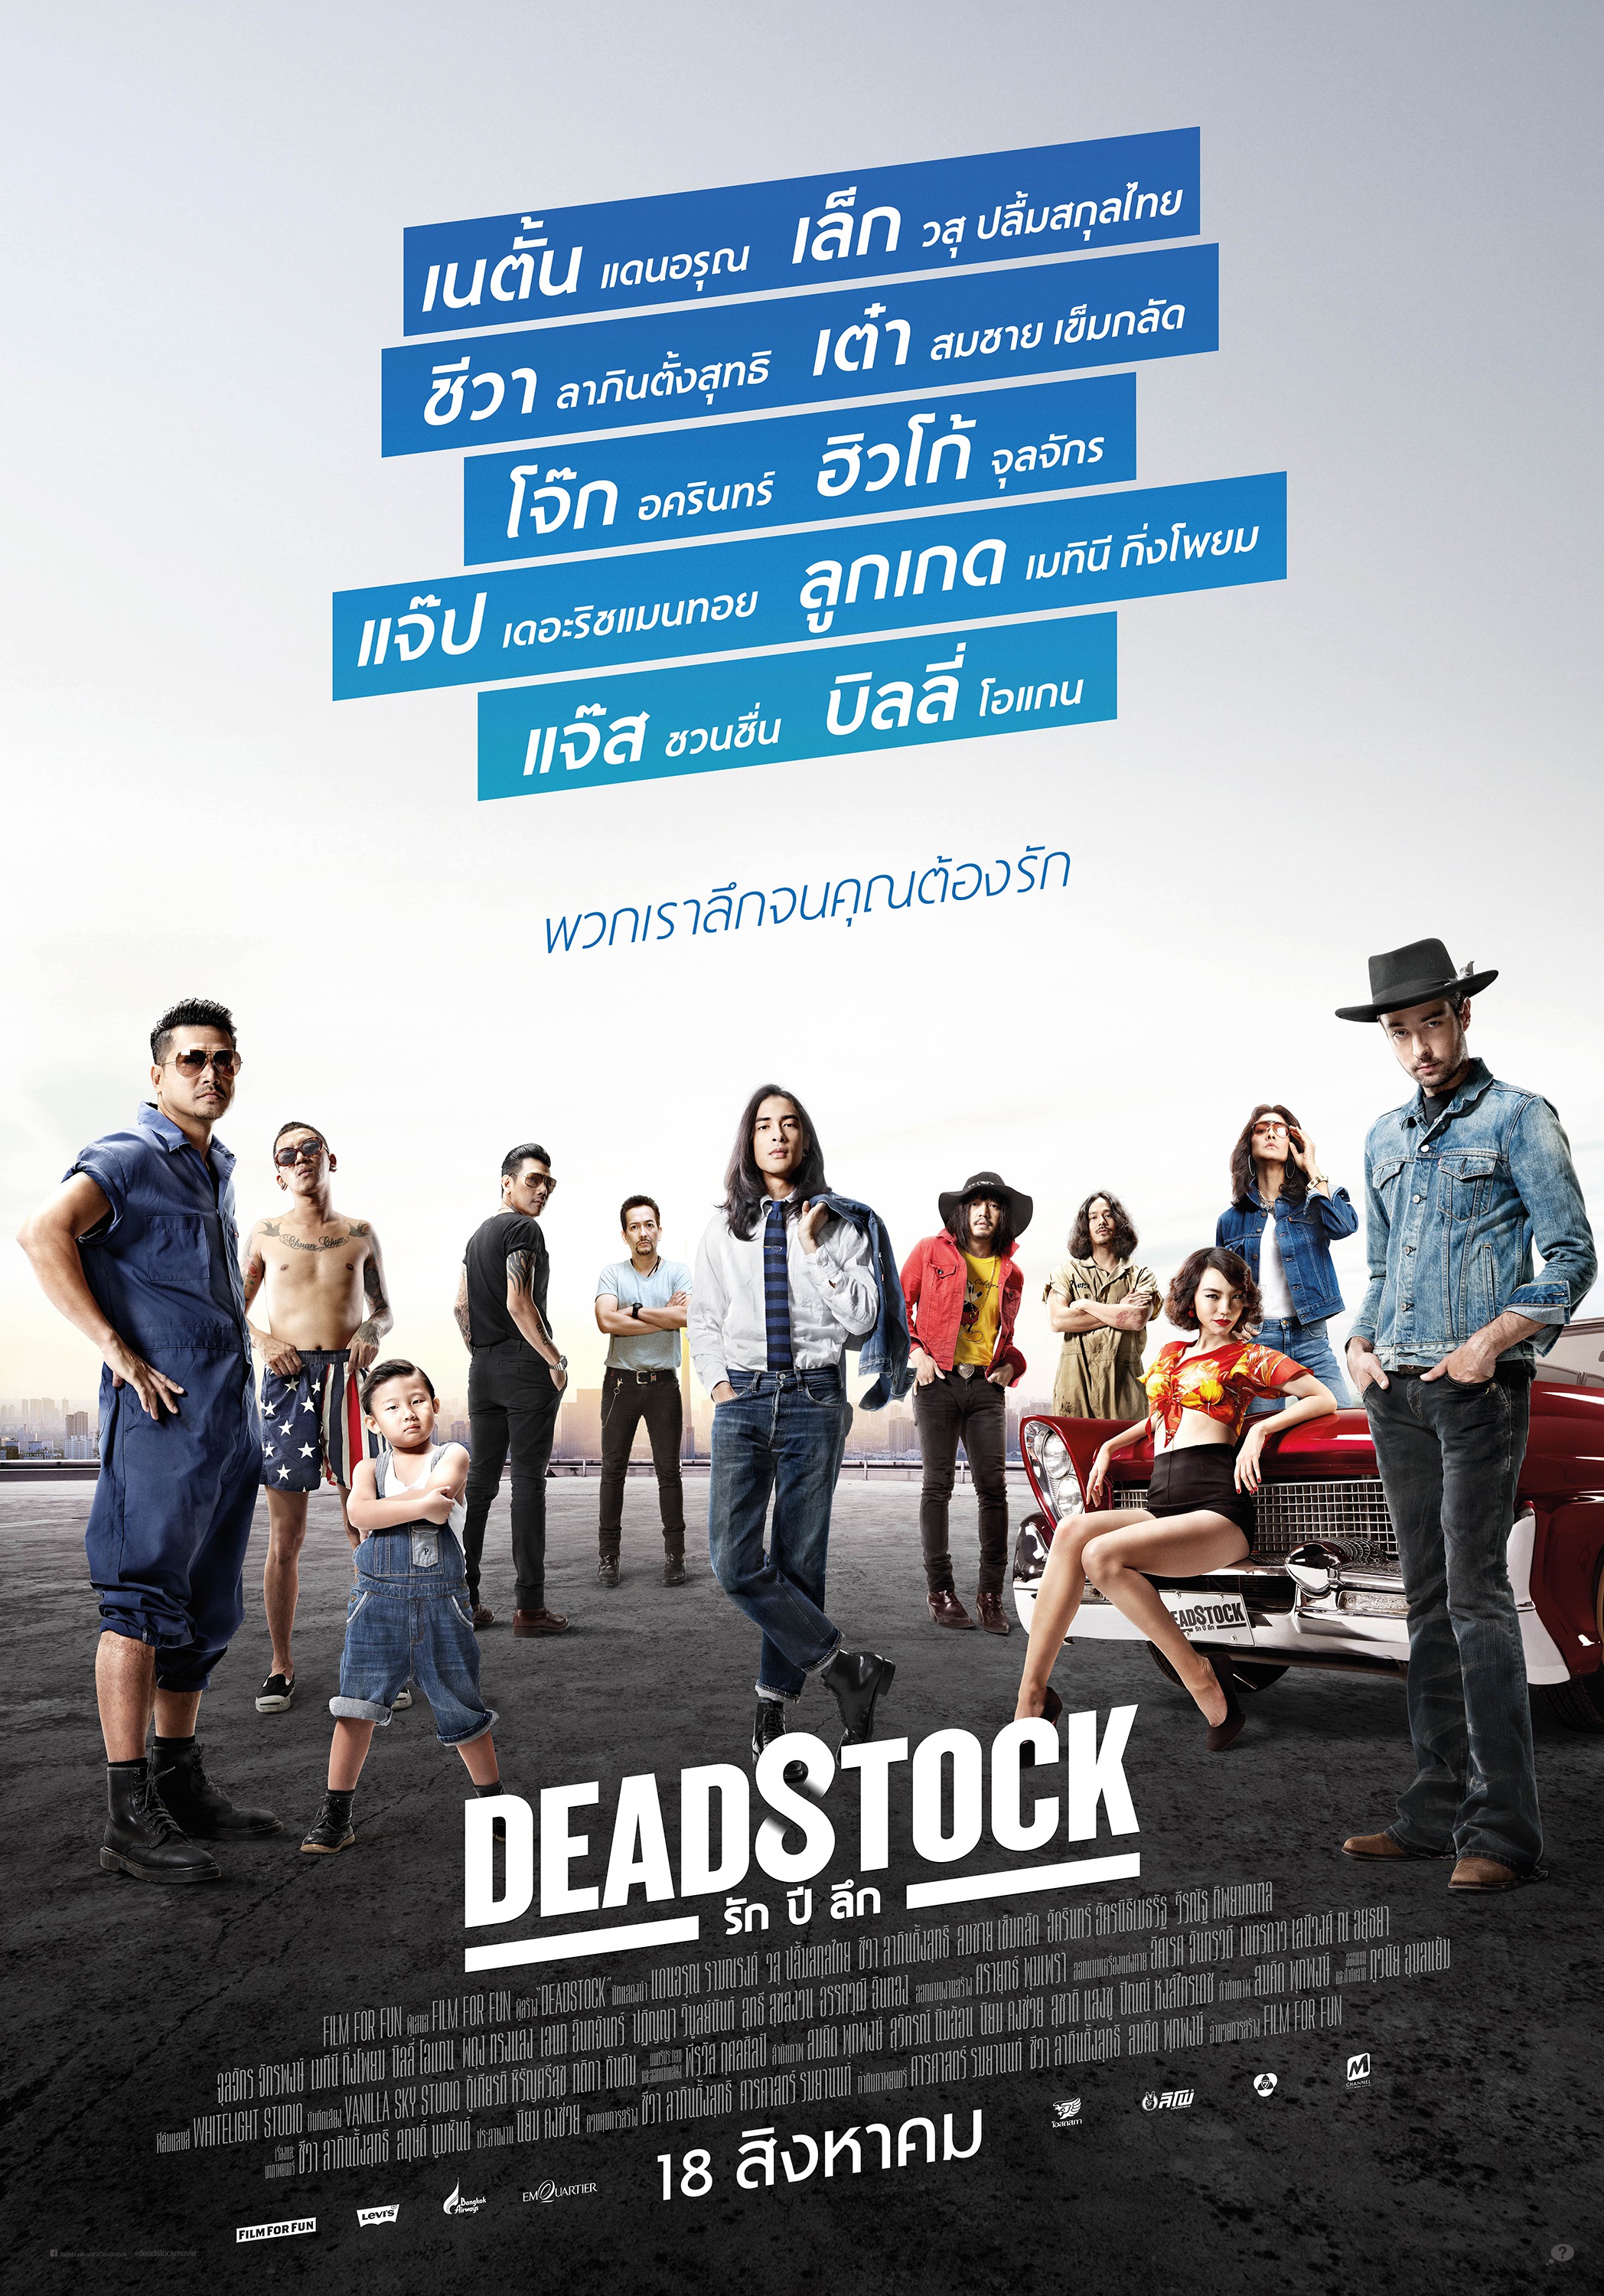 Mega Sized Movie Poster Image for Deadstock (#11 of 11)